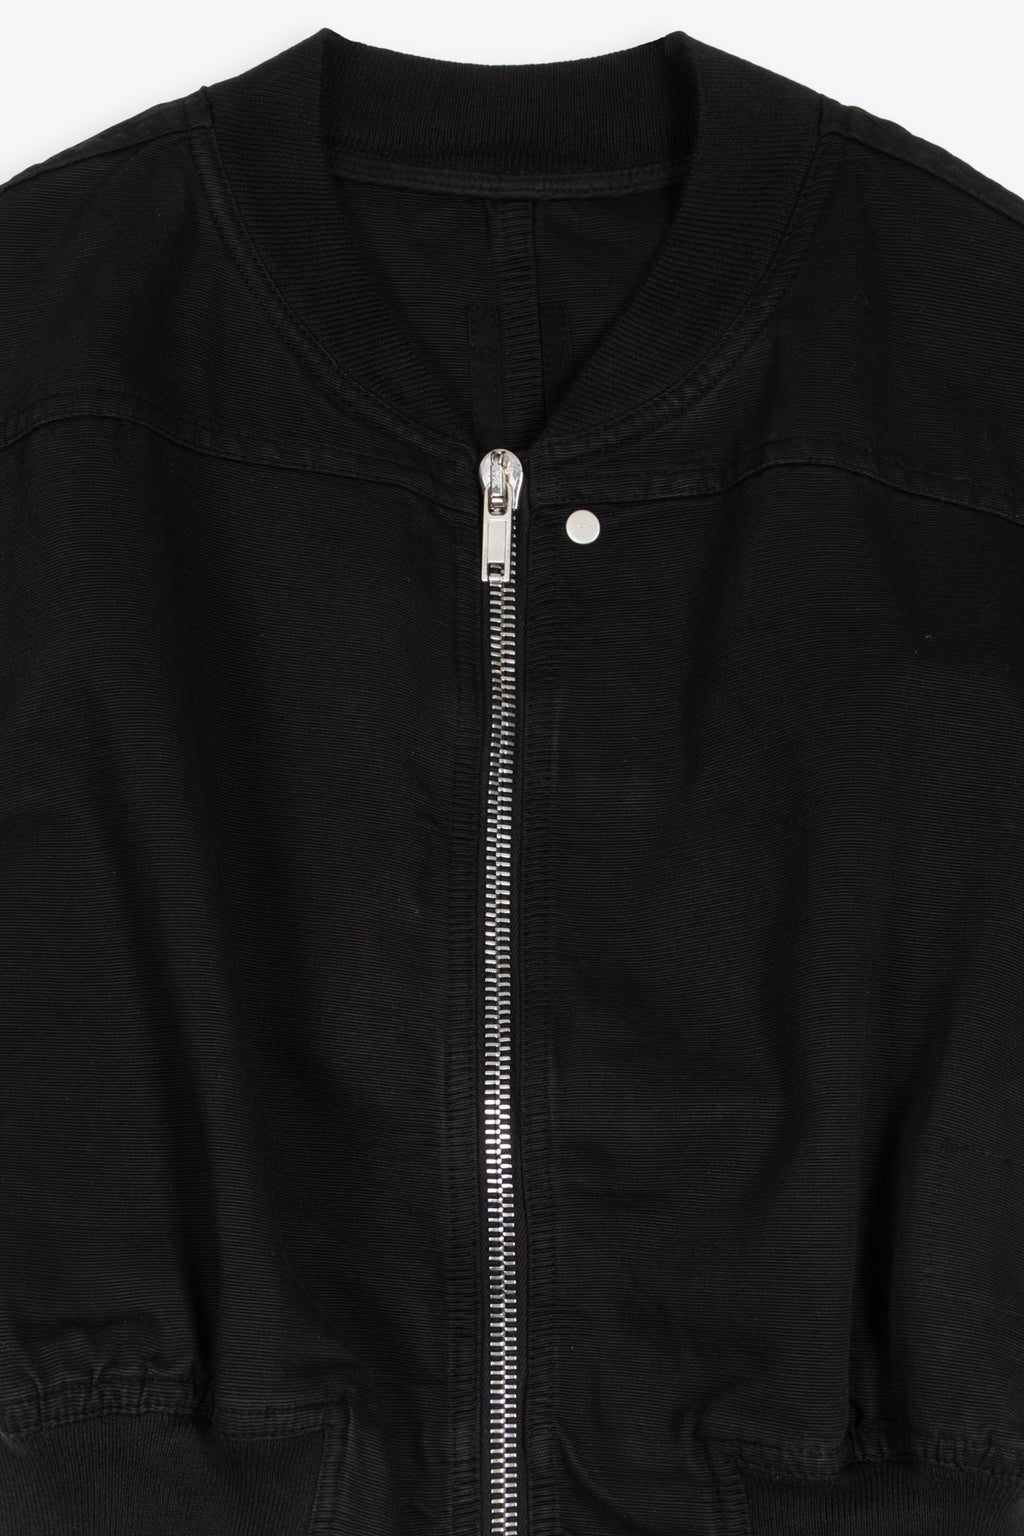 alt-image__Black-cotton-cropped-sleveless-bomber-jacket---babel-Tatlin-Bomber